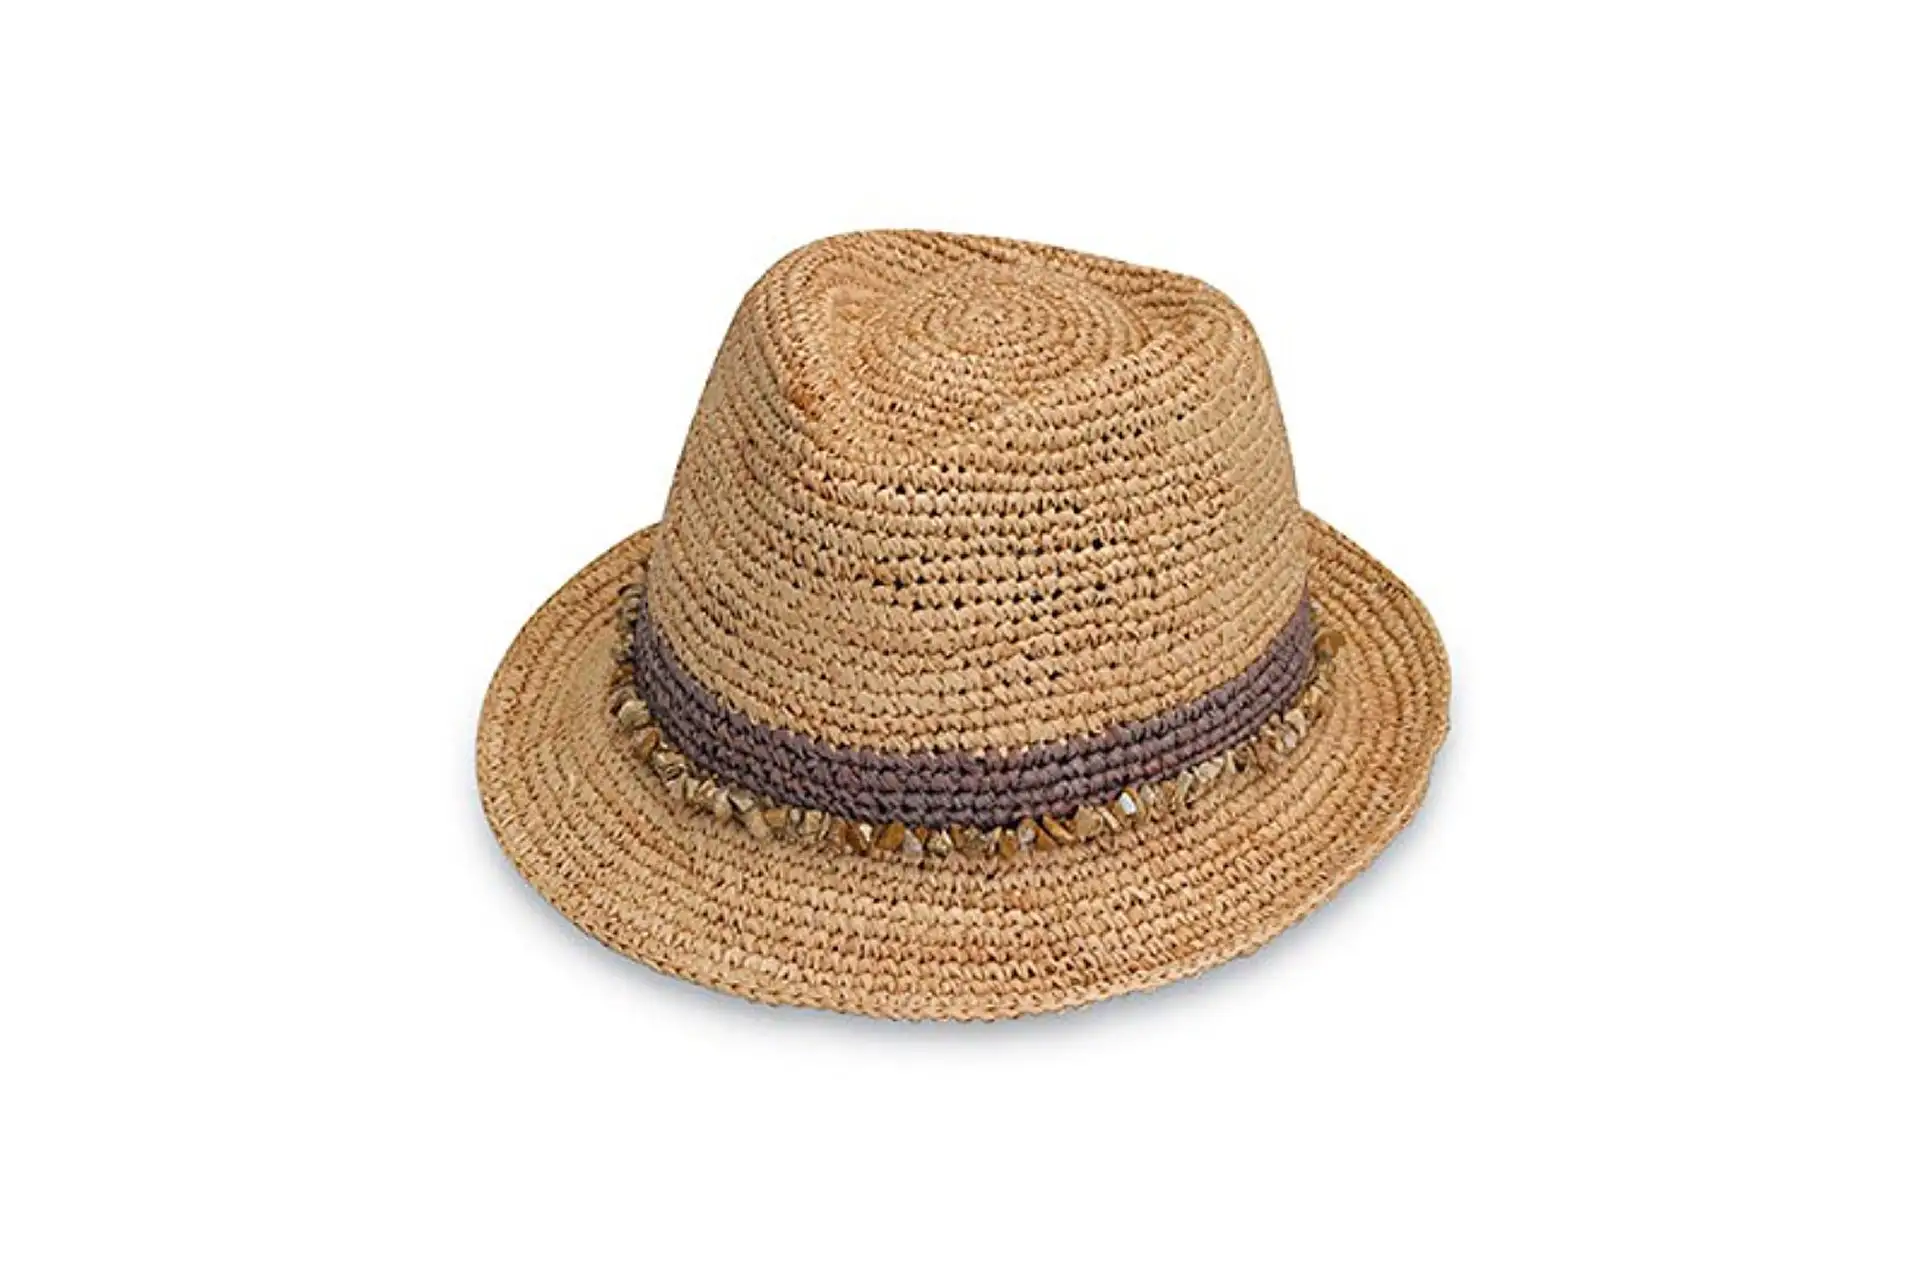 Wallaroo Summer Hat; Courtesy of Amazon